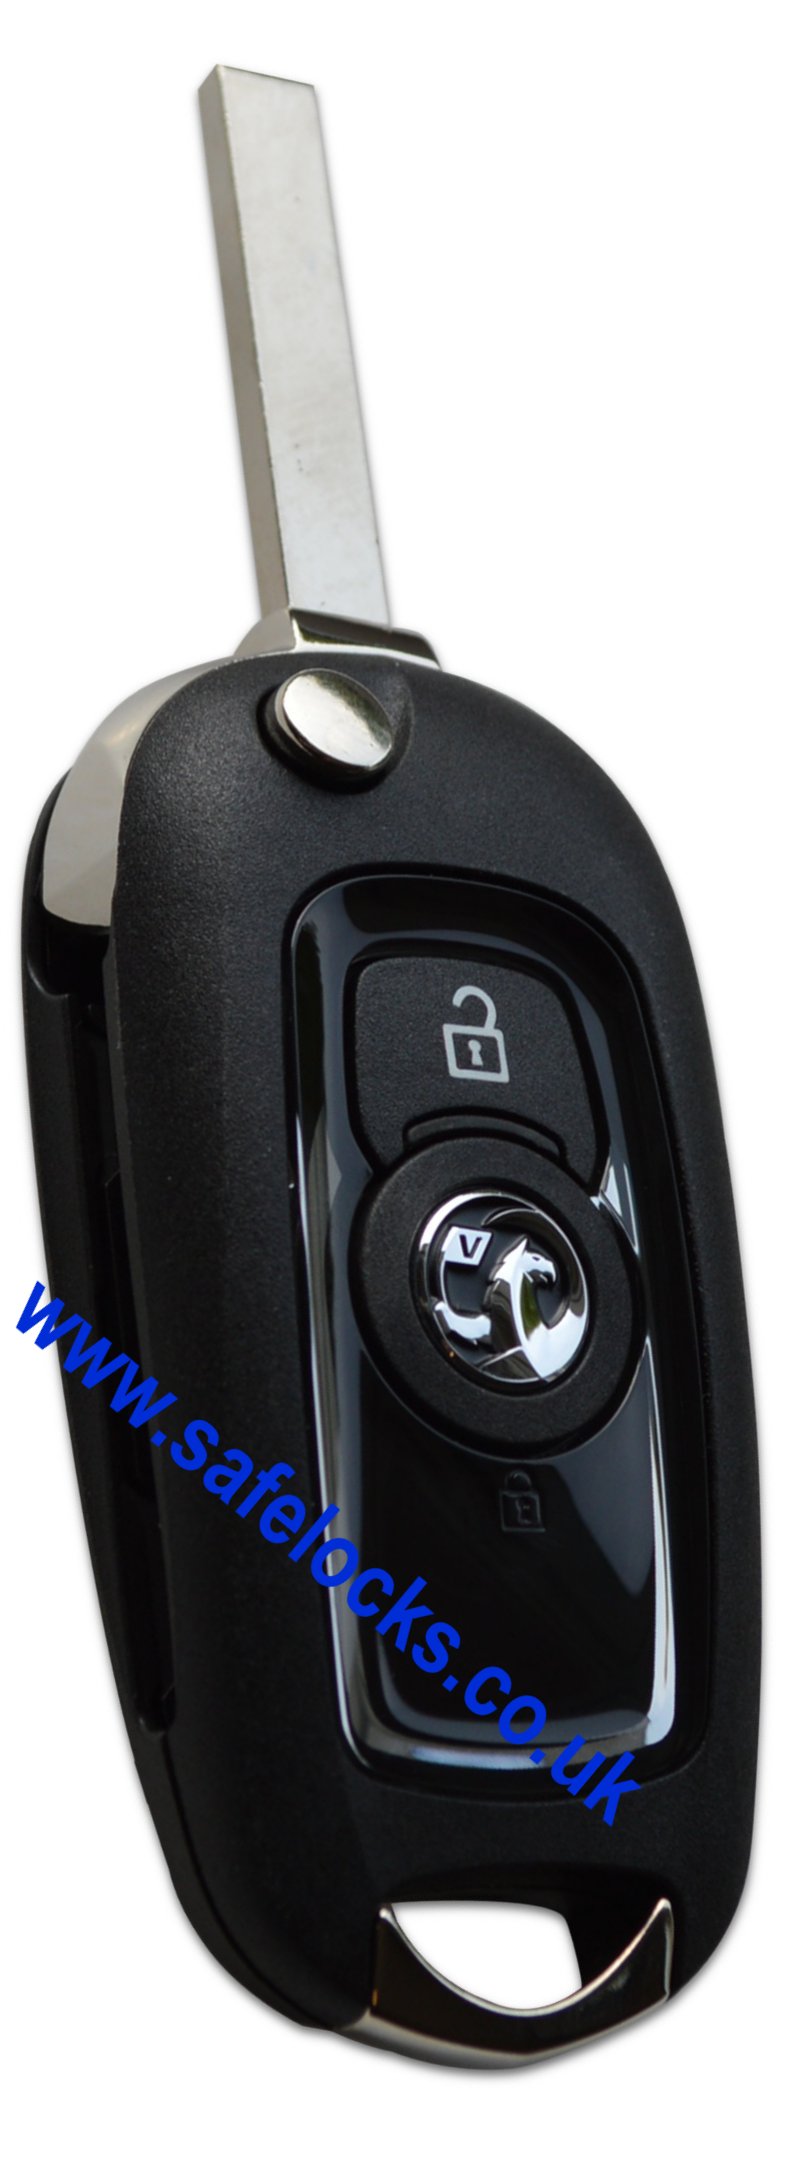 Vauxhall Astra K 2015-2017 Gloss Black 2 button remote key fob 39061472